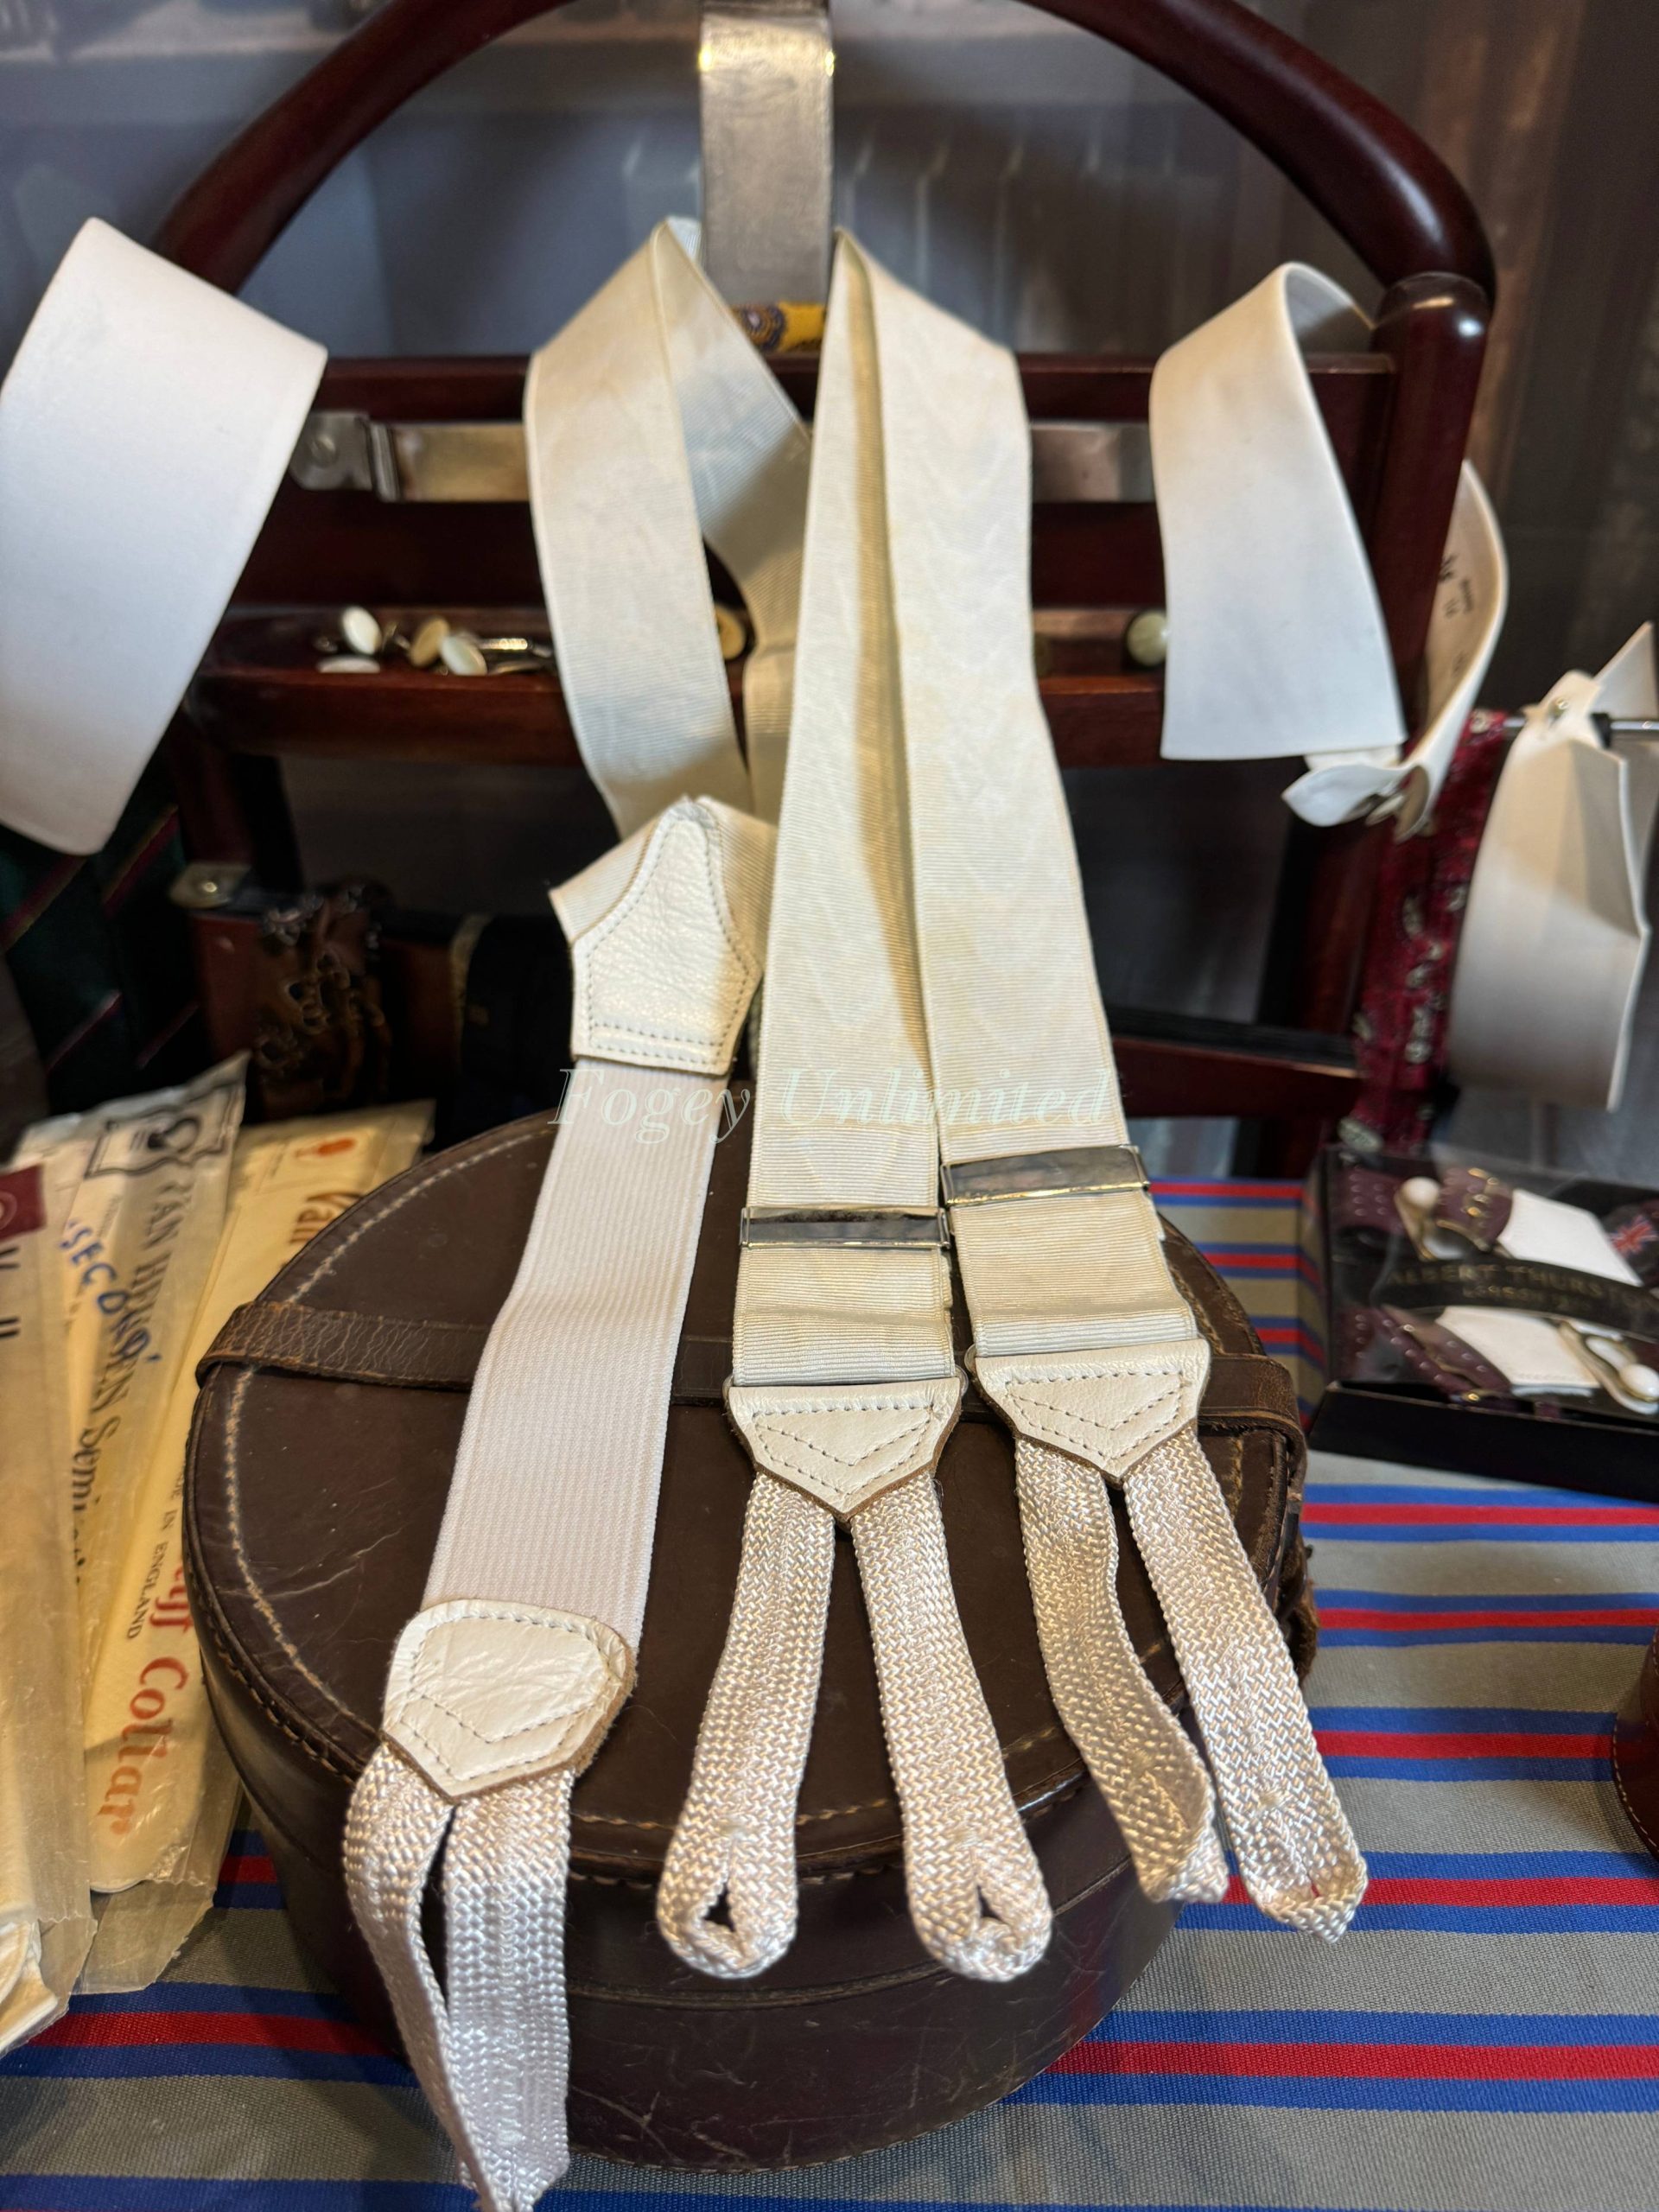 Vintage Thurston Moire Barathea Formal Braces/Suspenders. As worn by James  Bond !!